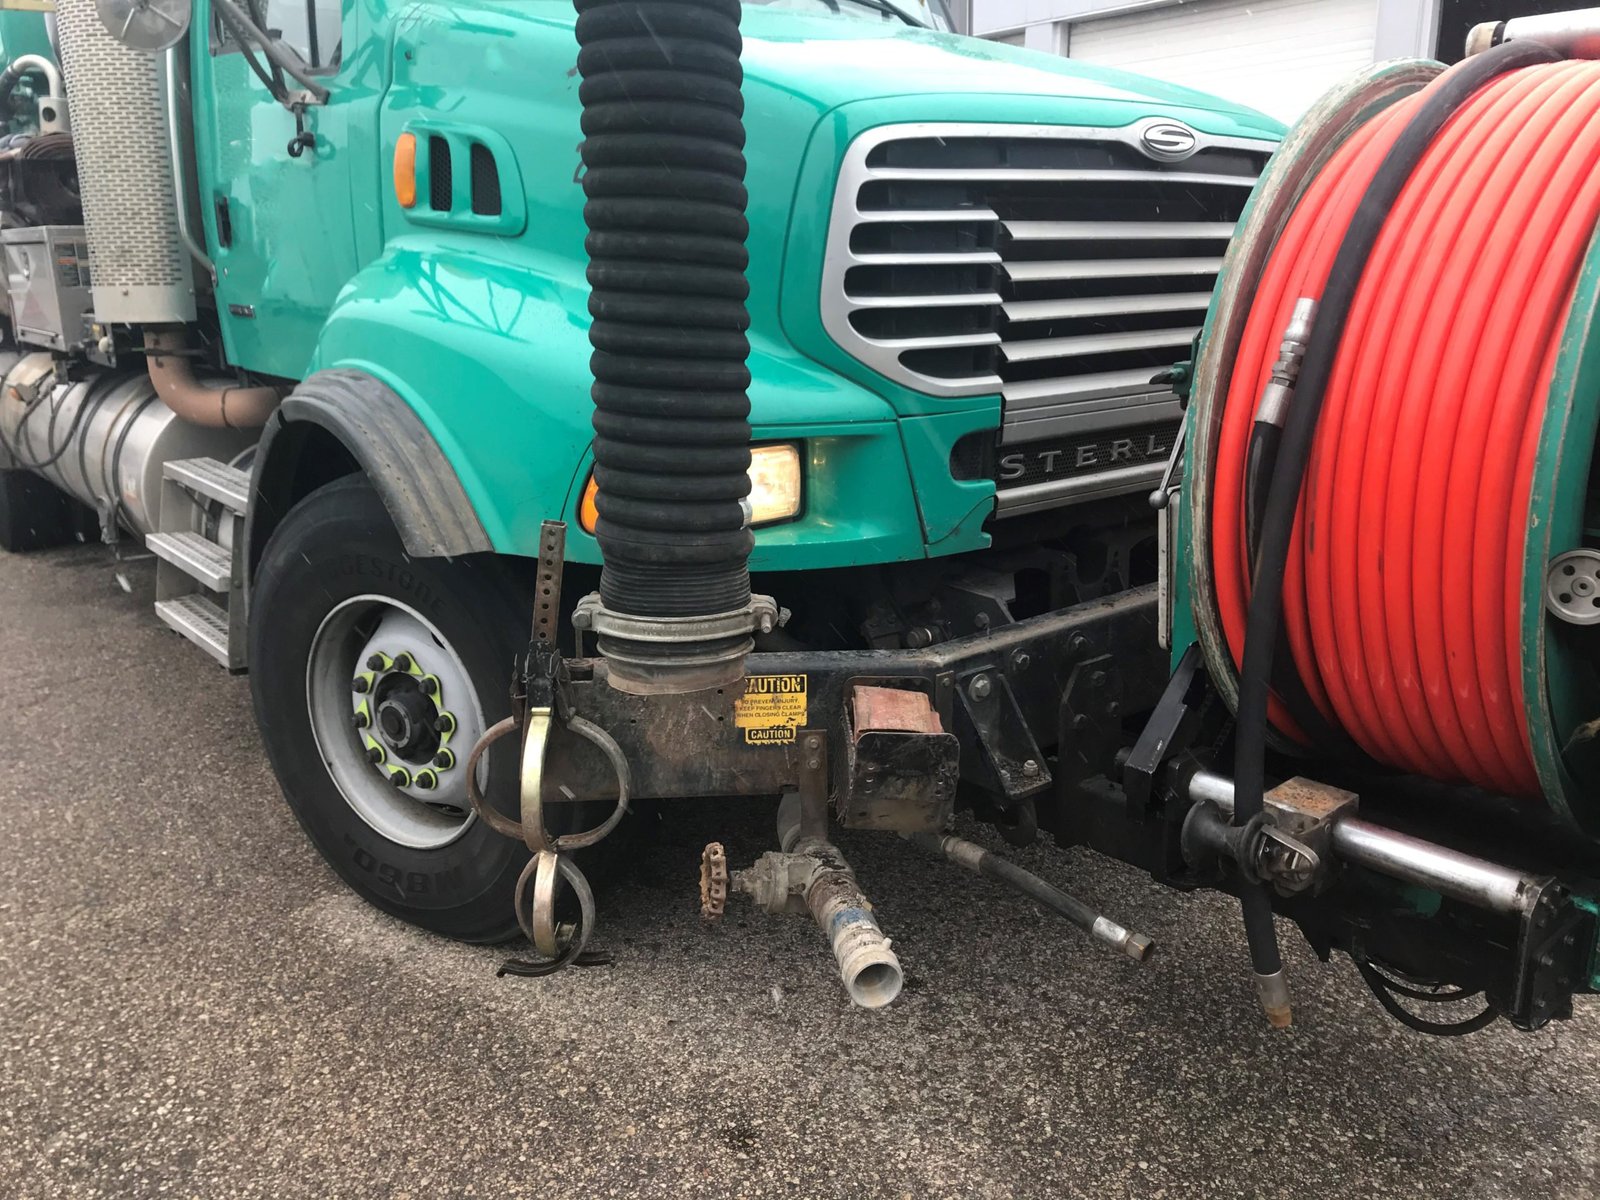 Hose reel vac hose angle with pump off